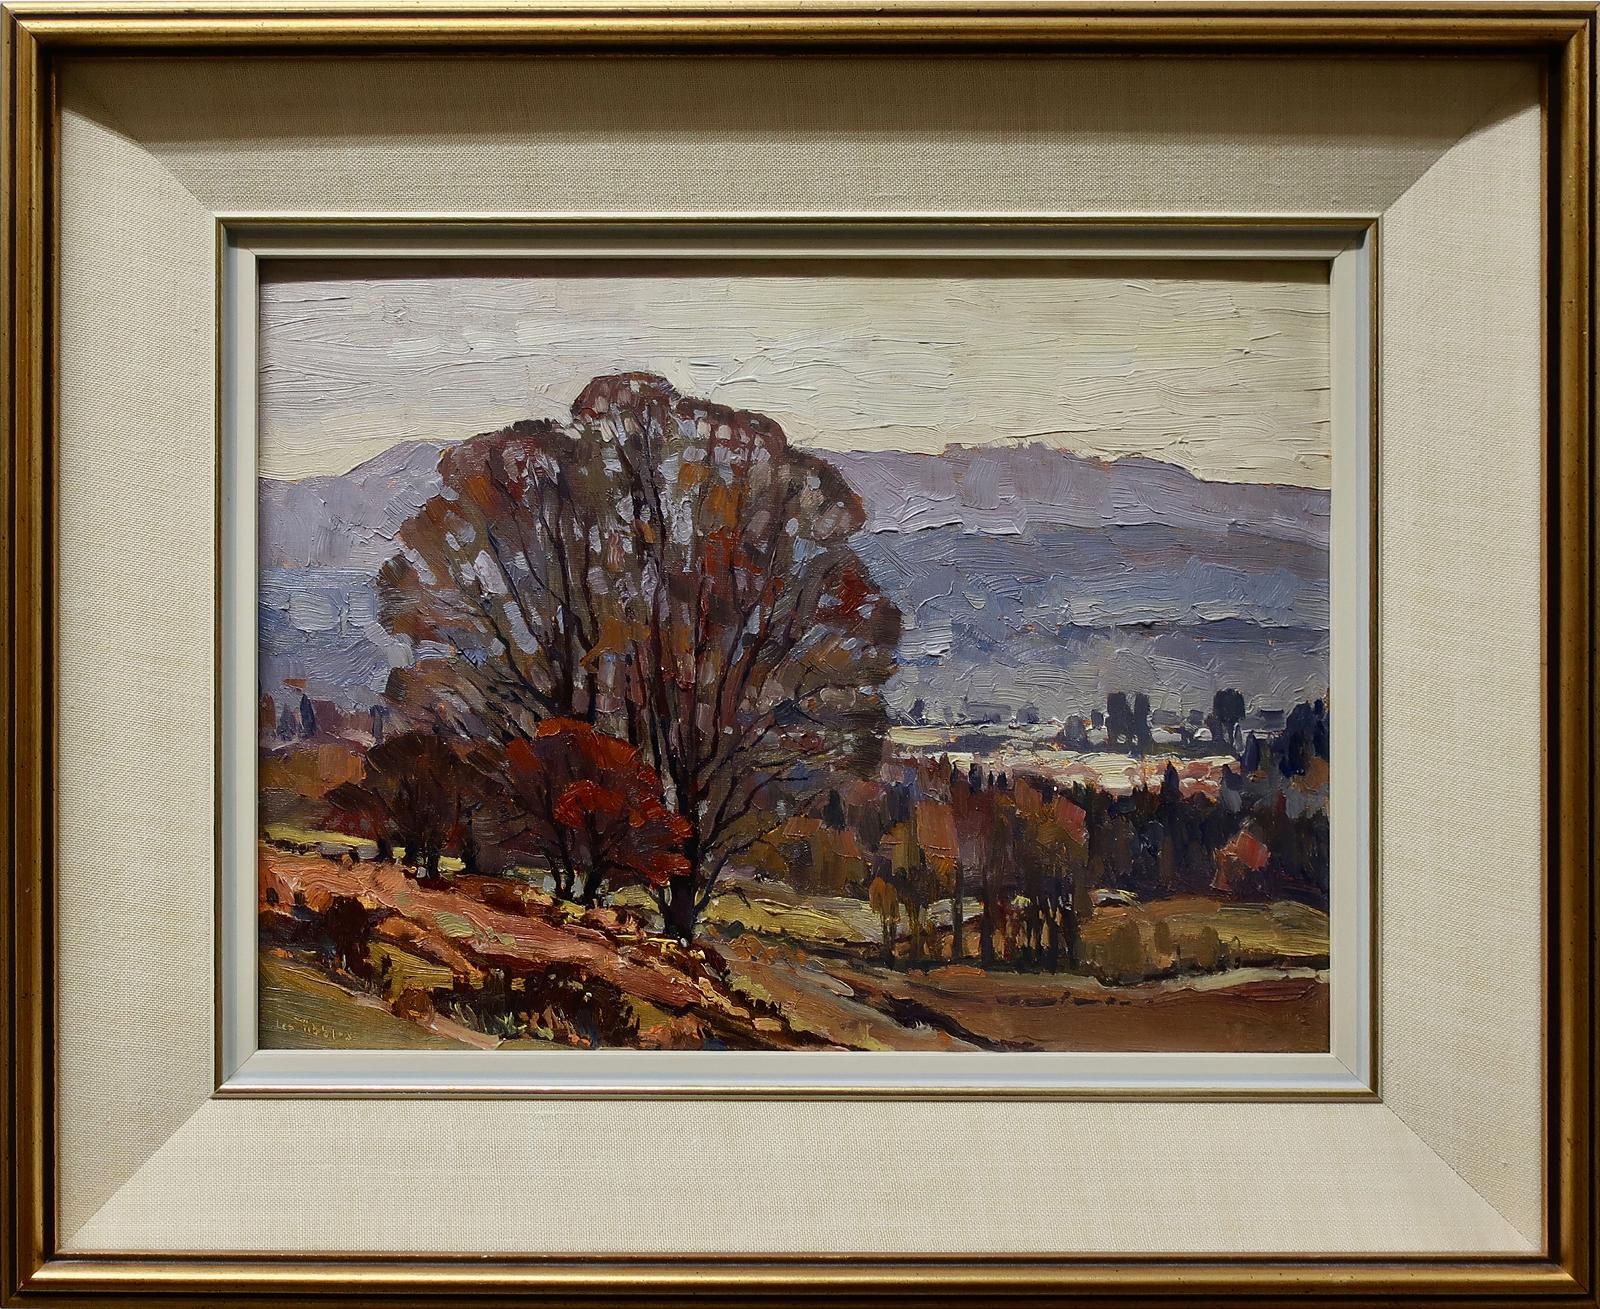 Leslie G. (Les) Tibbles (1916-2014) - Untitled (Fall Landscape)